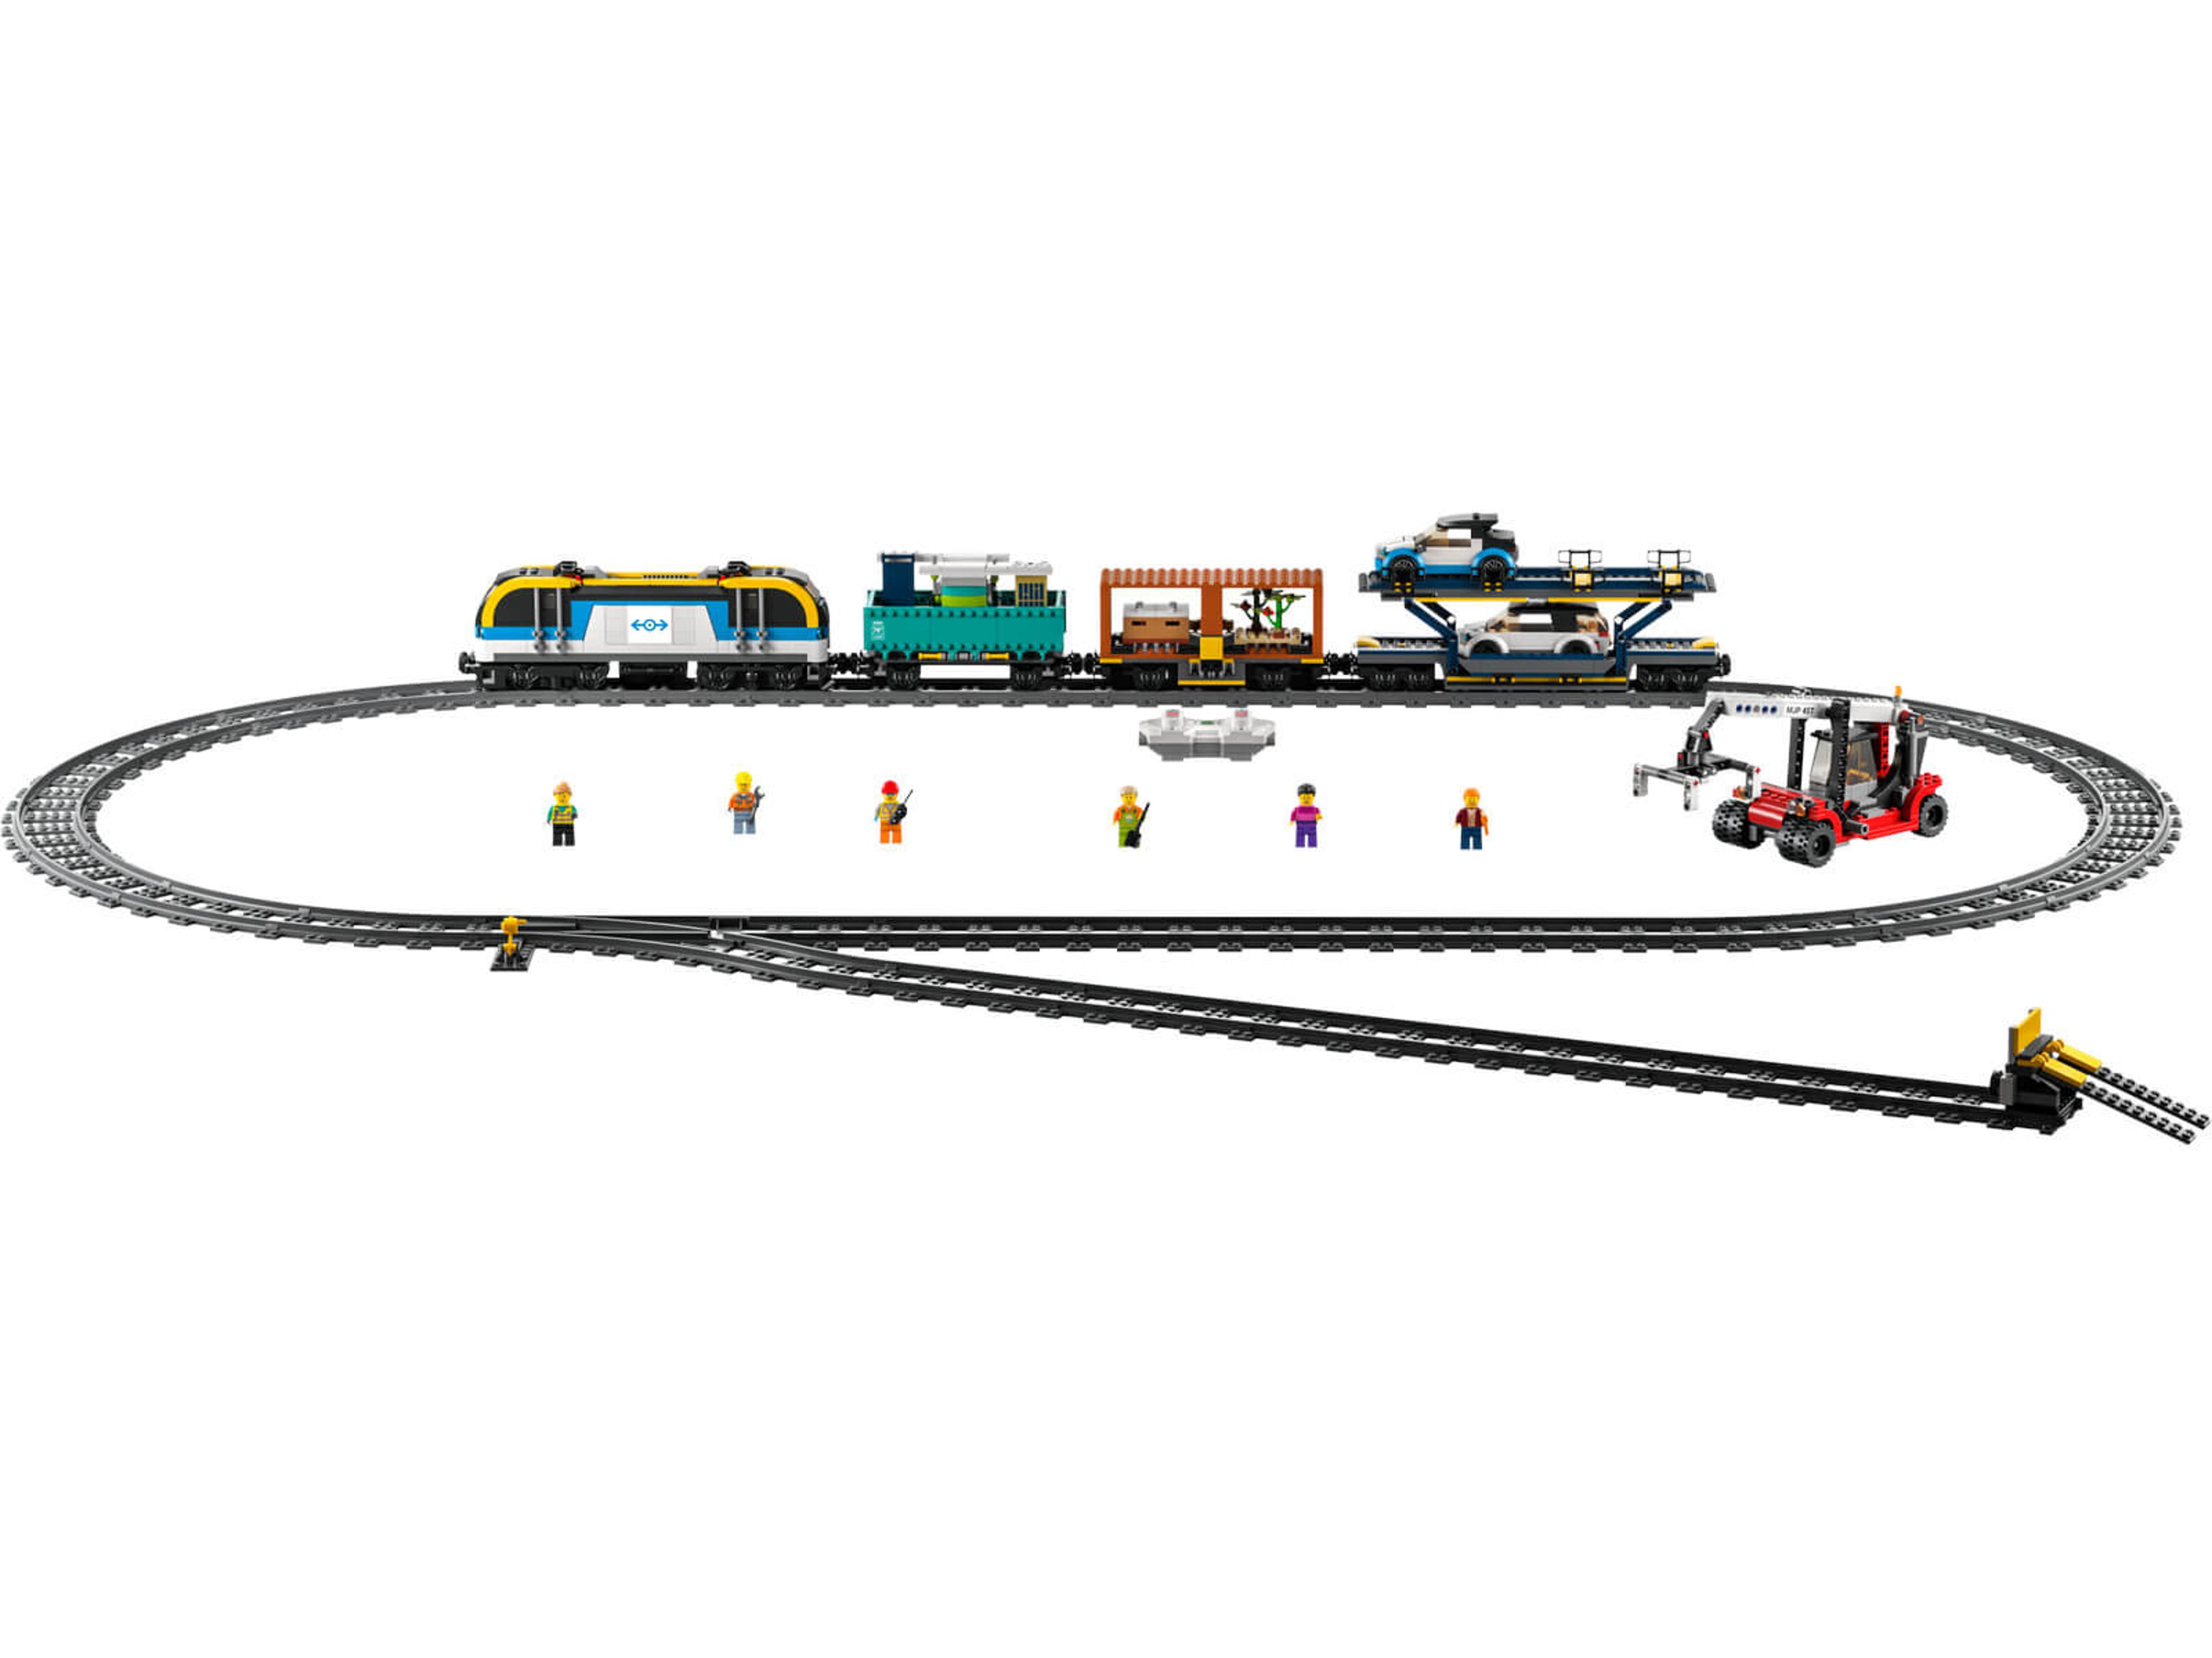 LEGO City - Freight Train